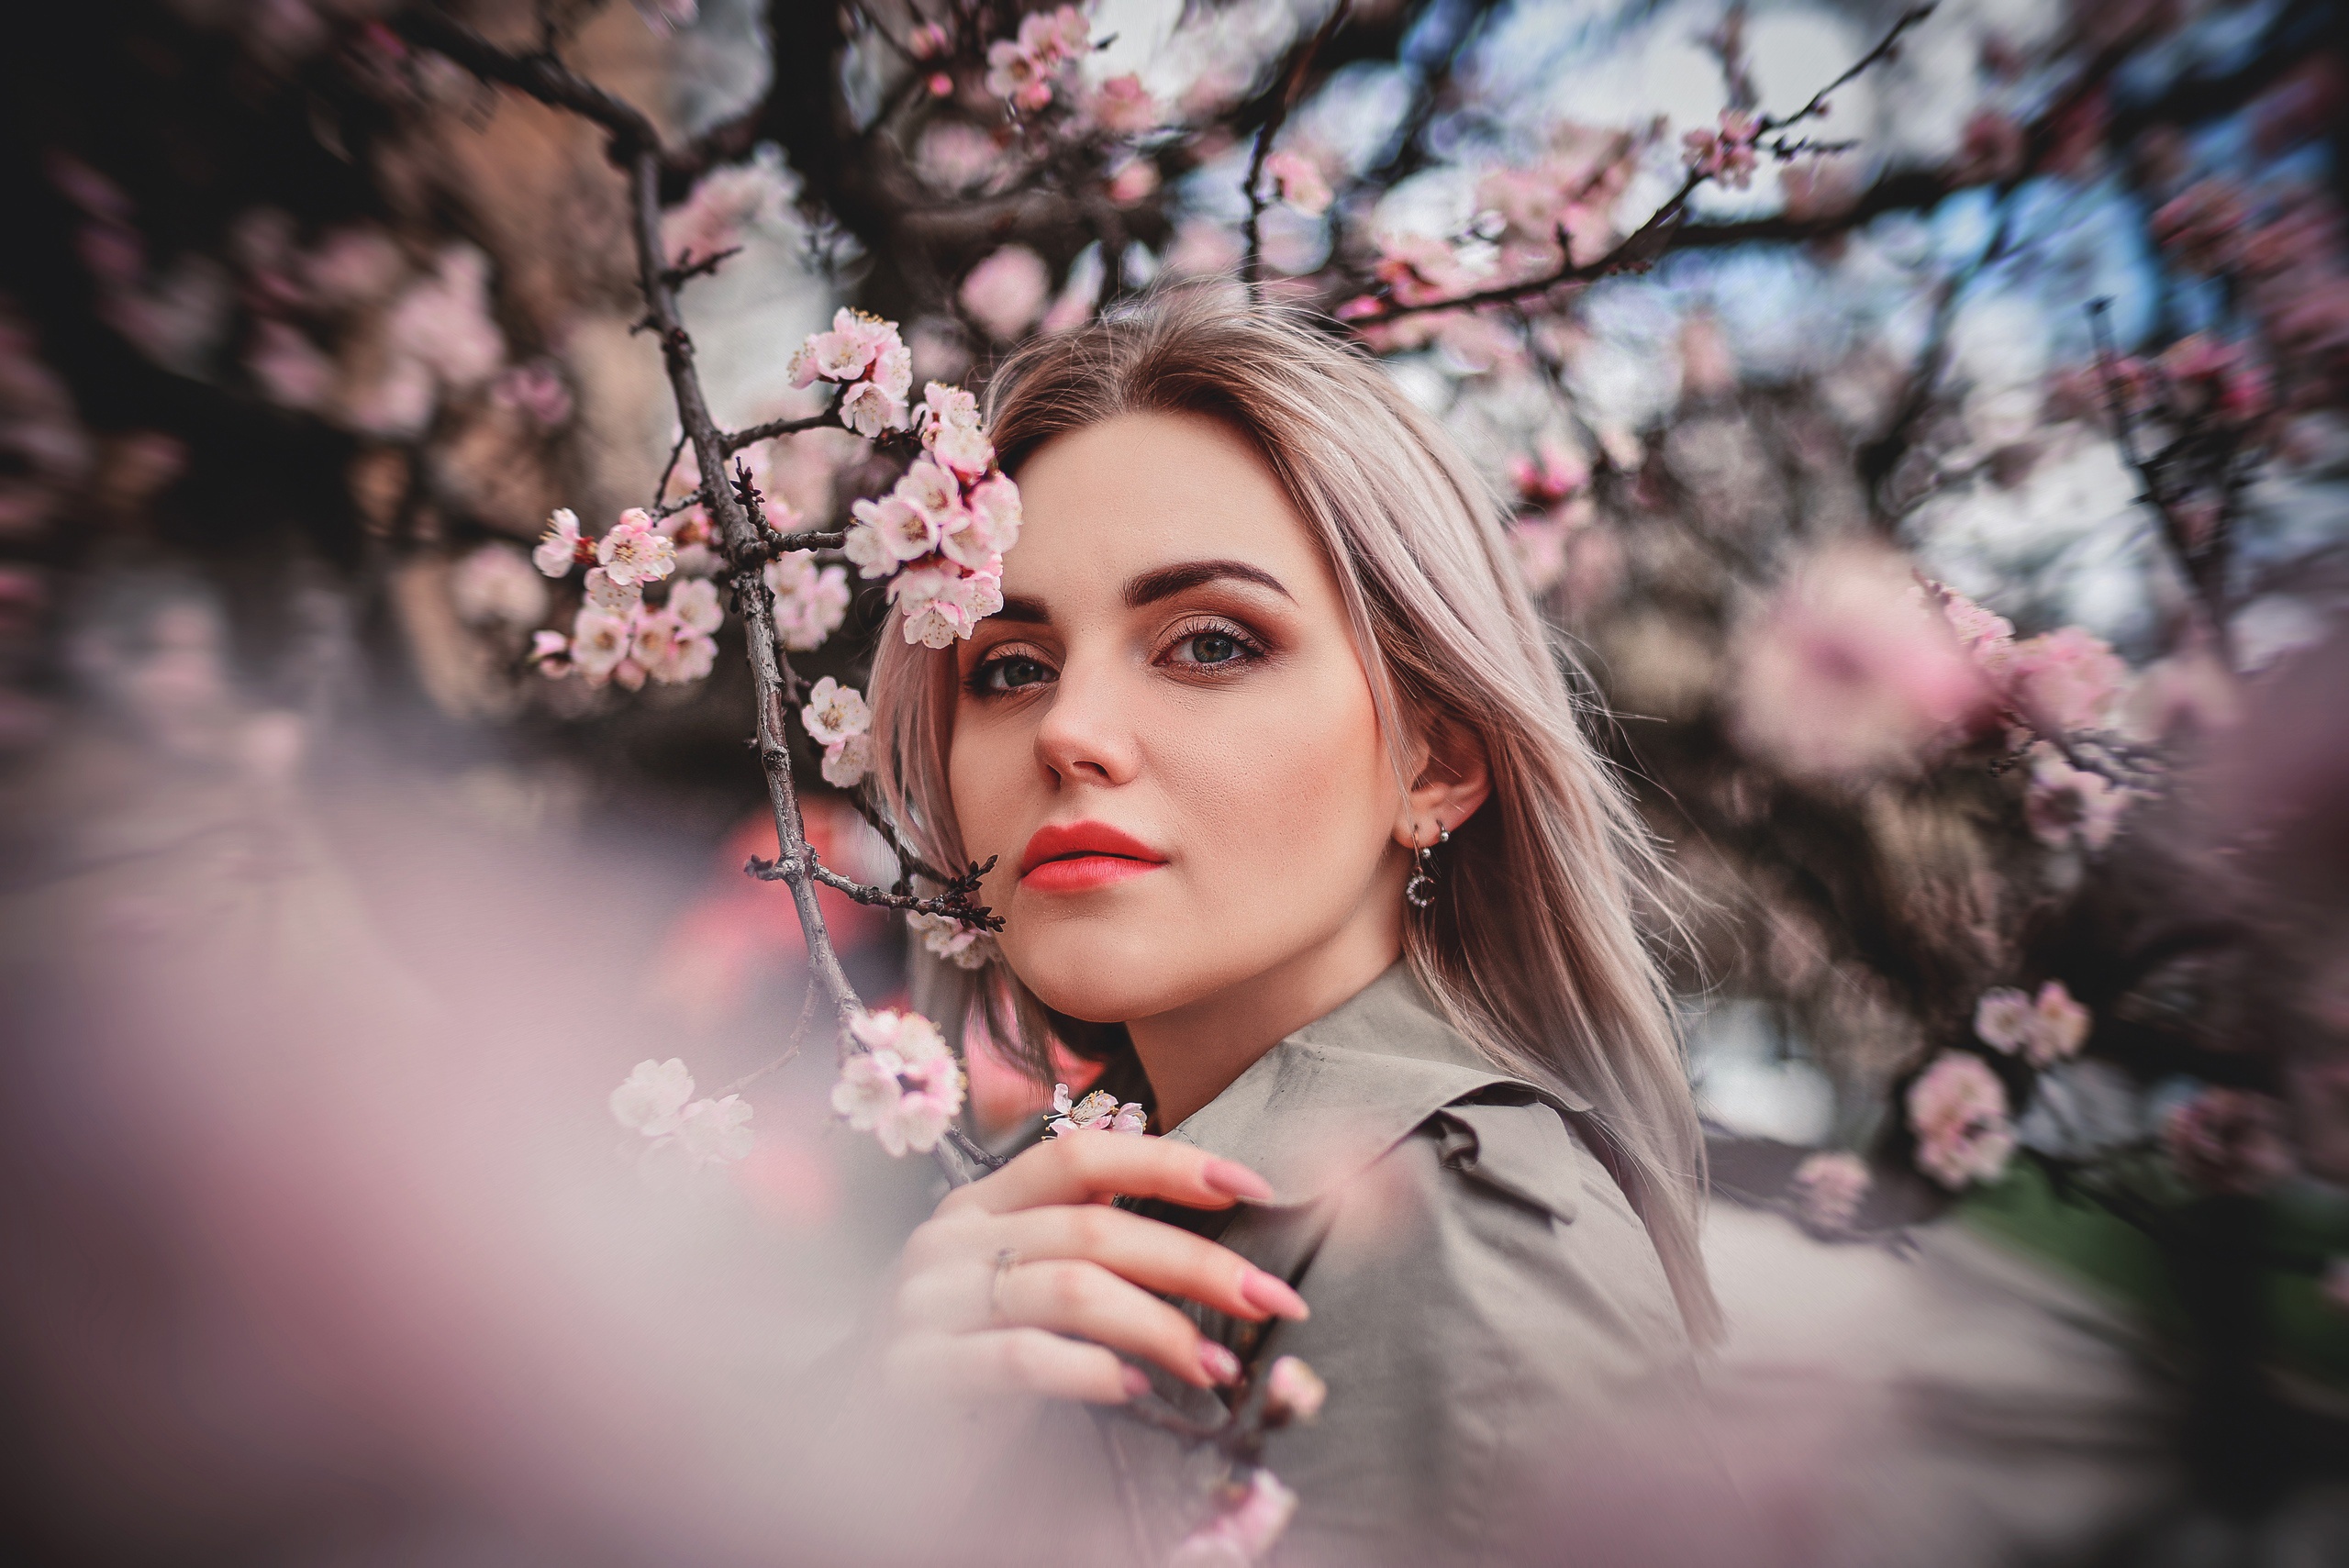 Blossom woman. Фото блондинки весной апрель 2019.